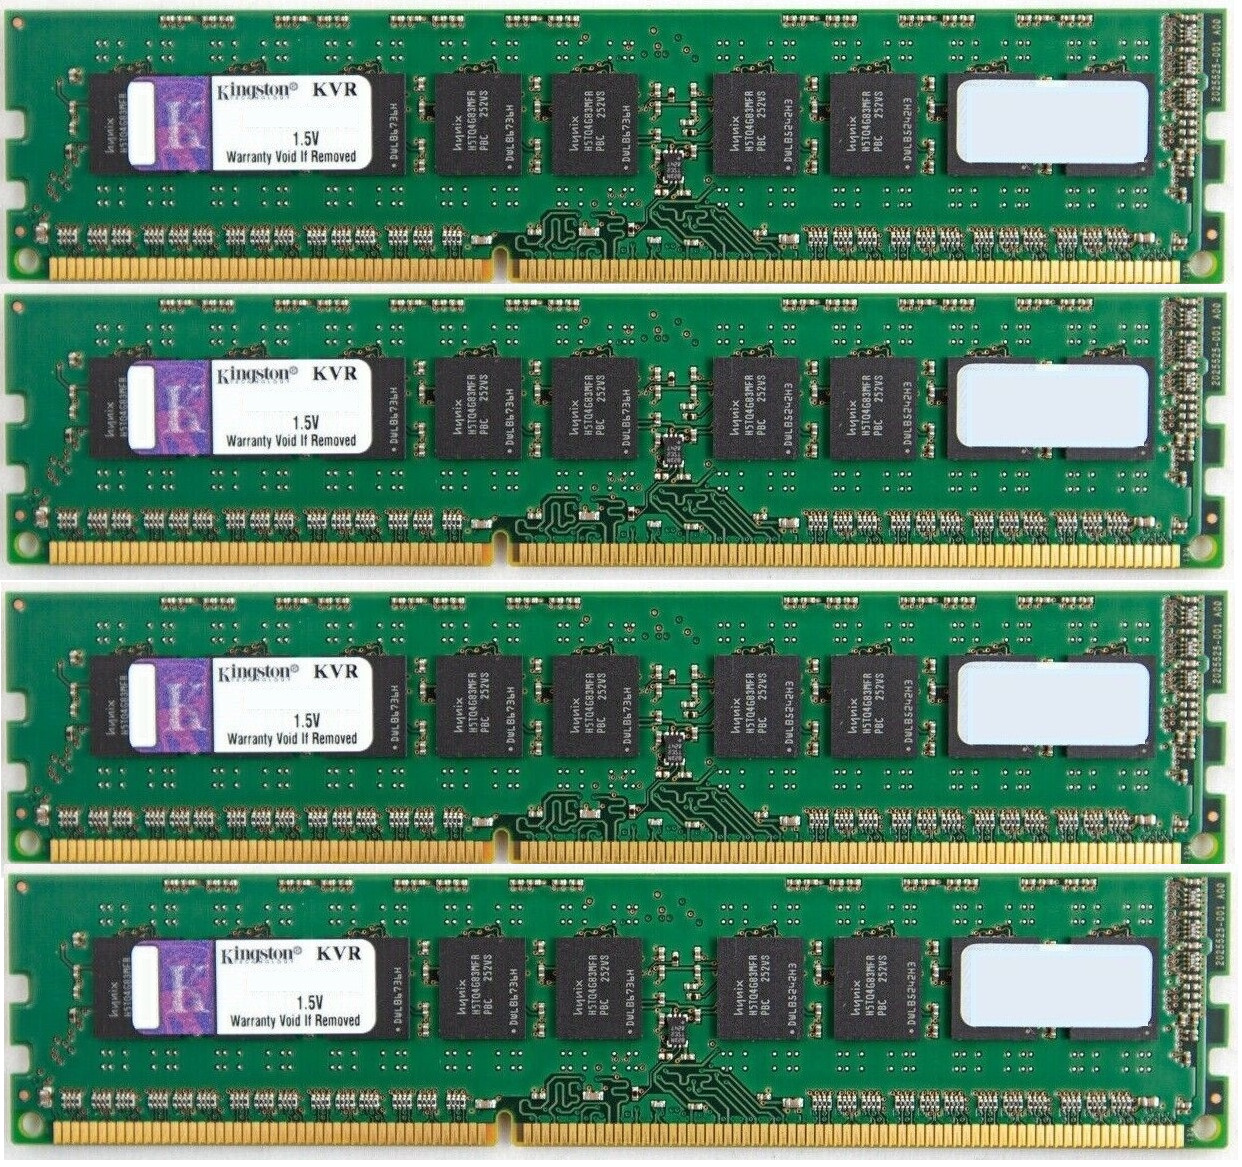 8GB Kingston DDR3 1333MHz PC3-10600E 240-Inch DIMM Memory CL11 non ECC/ECC 1.5V TOP